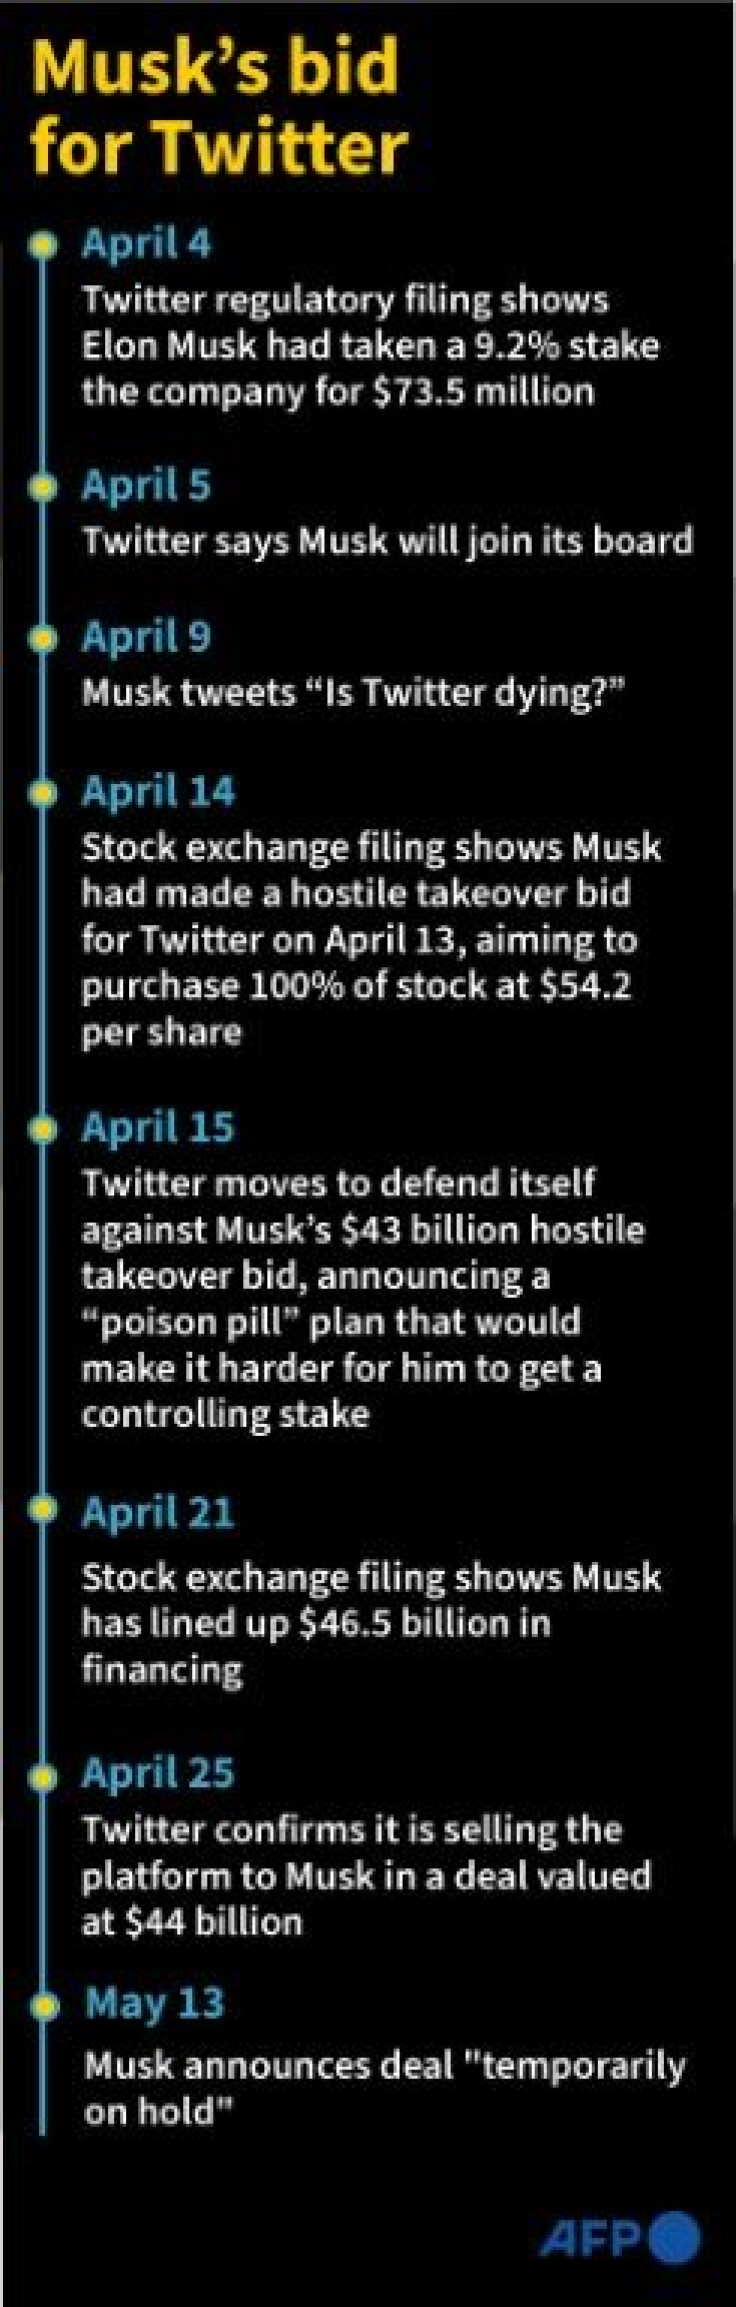 Timeline of developments between Elon Musk and Twitter